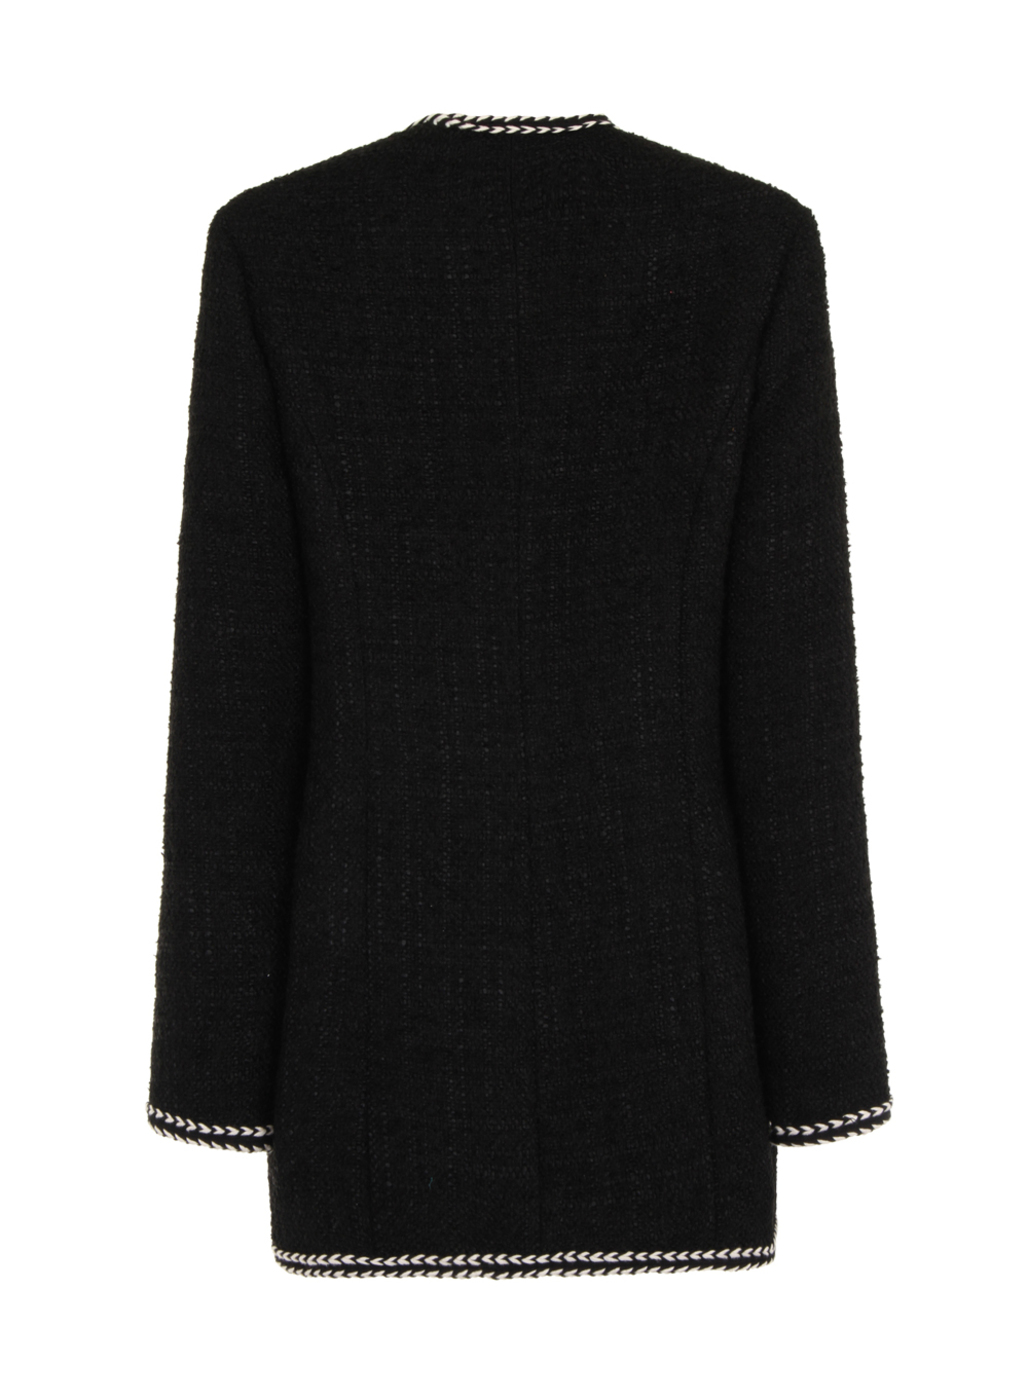 DARLING Cece Retro Mod 60s Vintage Women's Coat in Black